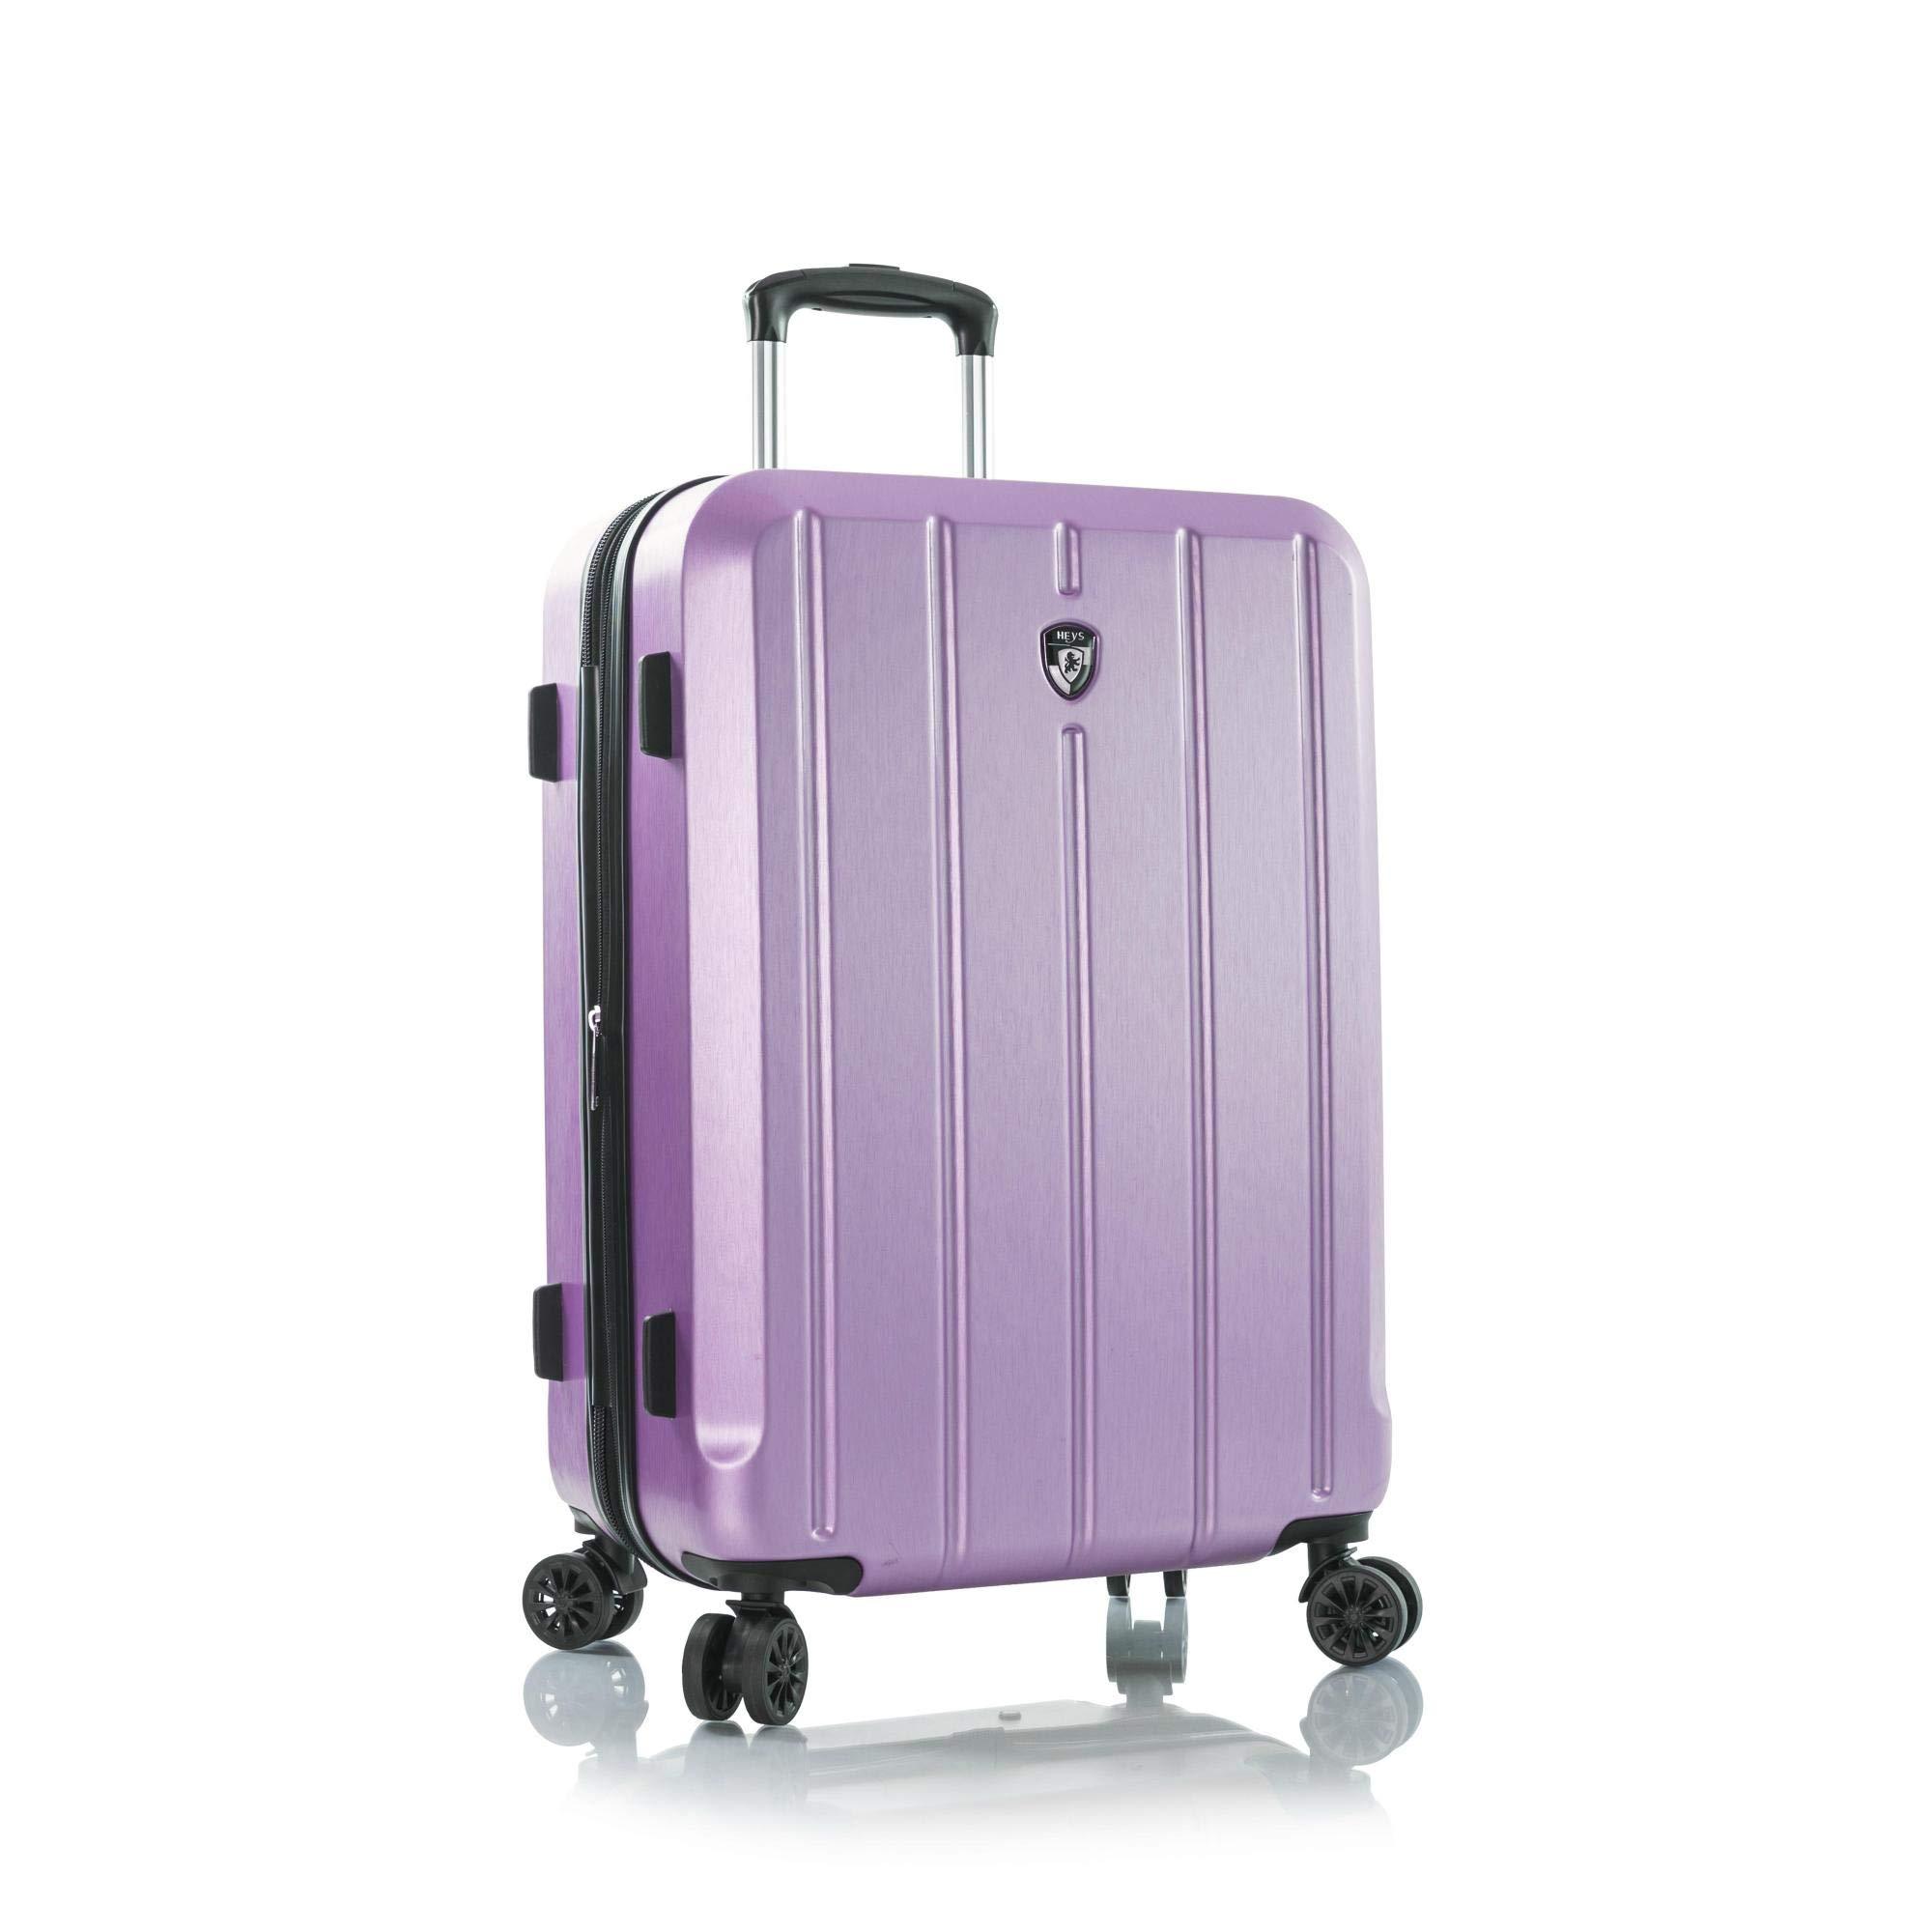 10122-0015-26 26 In. Para-lite Lilac Luggage, Rose Gold